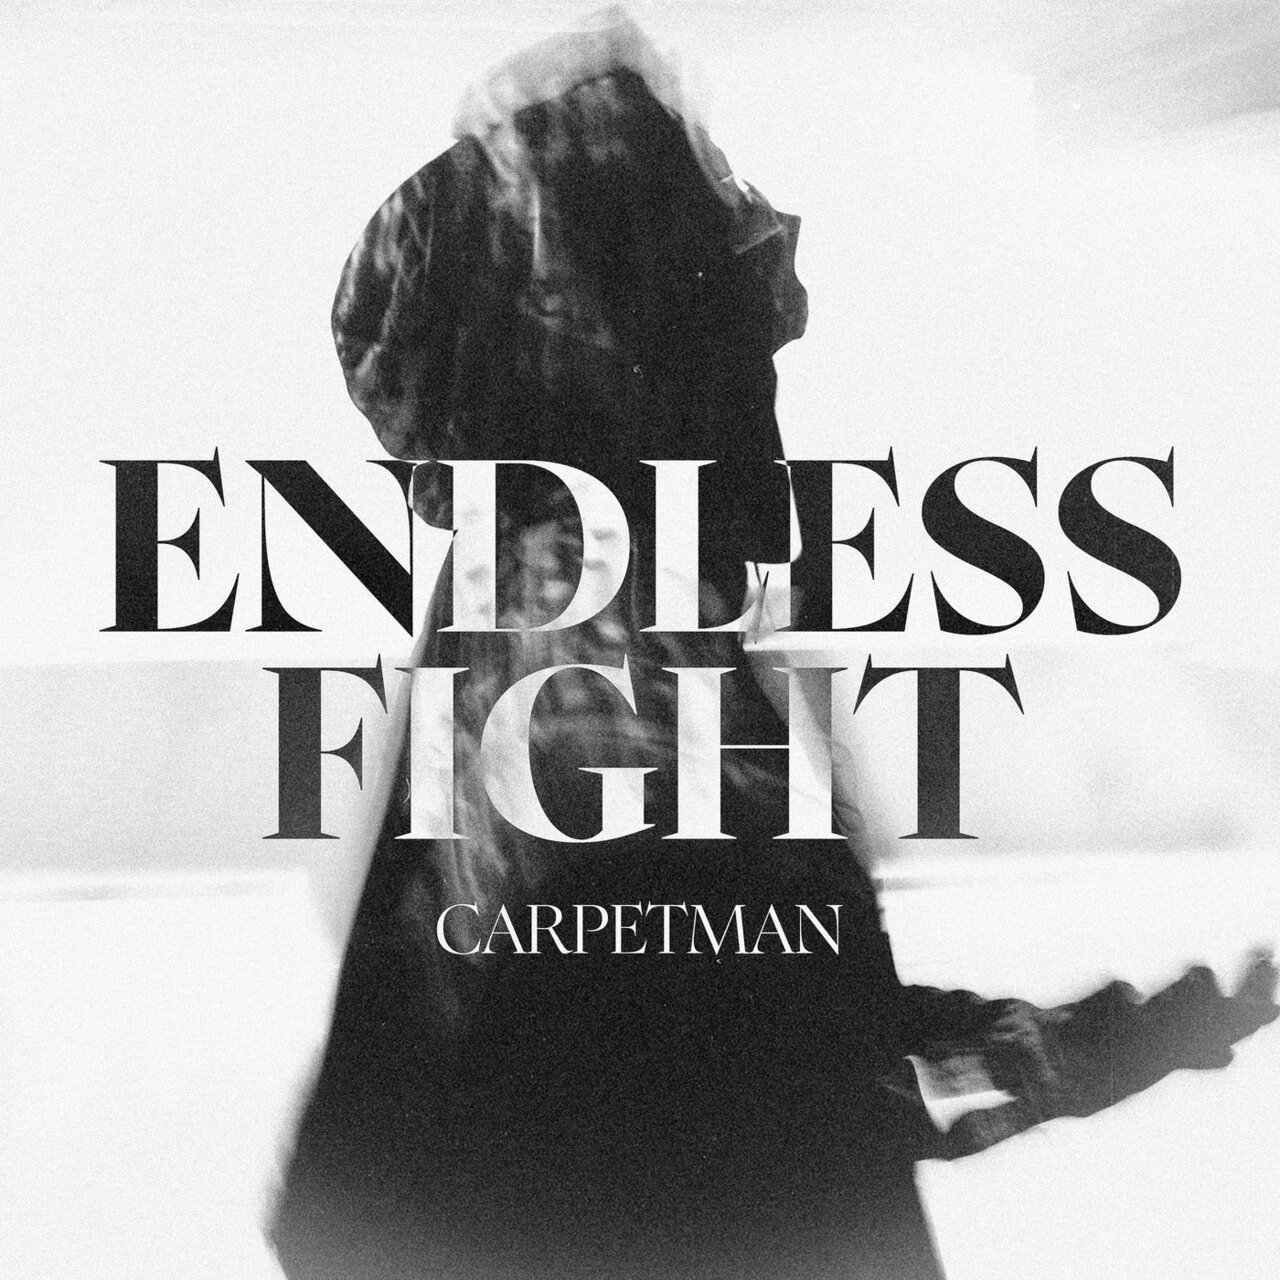 Carpetman Endless fight cover artwork